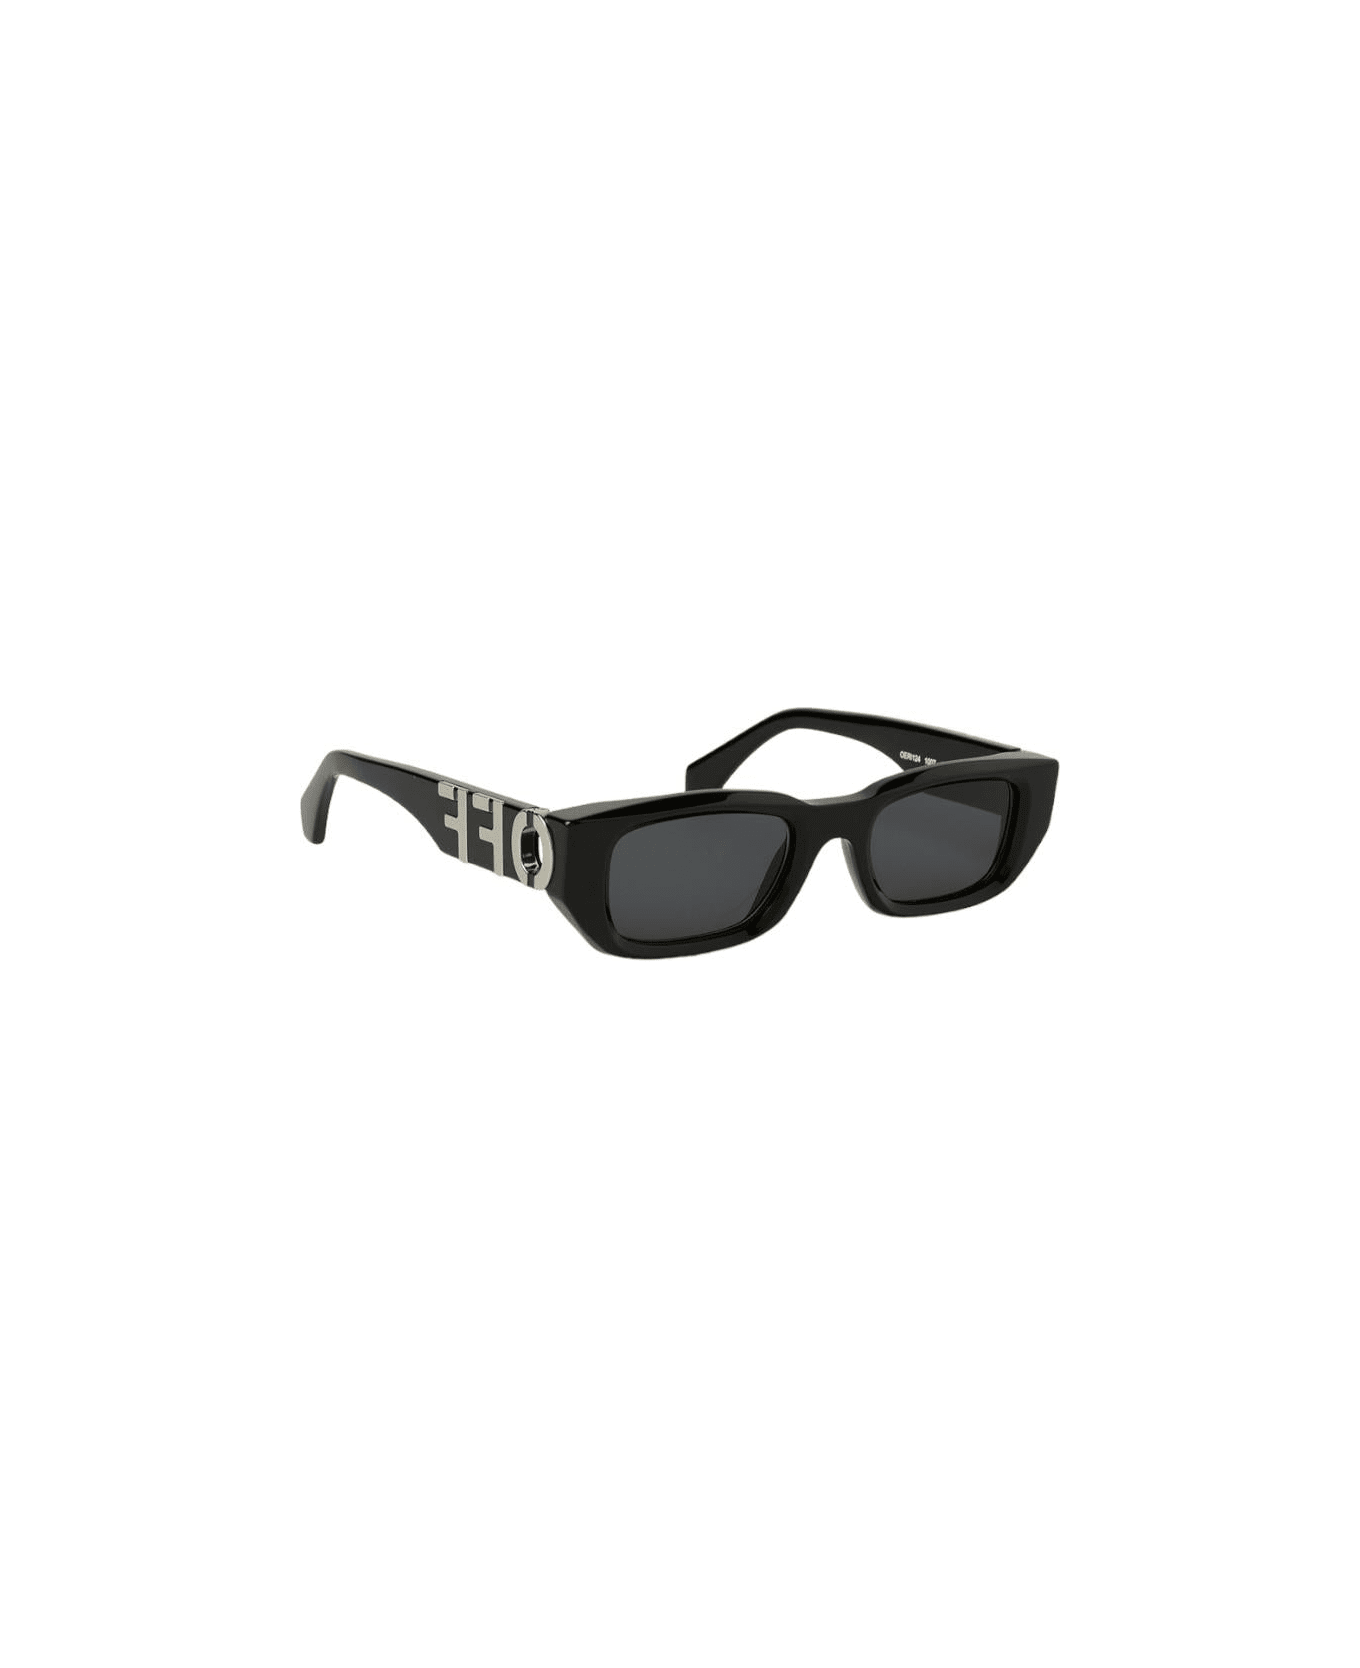 Off-White Fillmore - Oeri124 Sunglasses サングラス